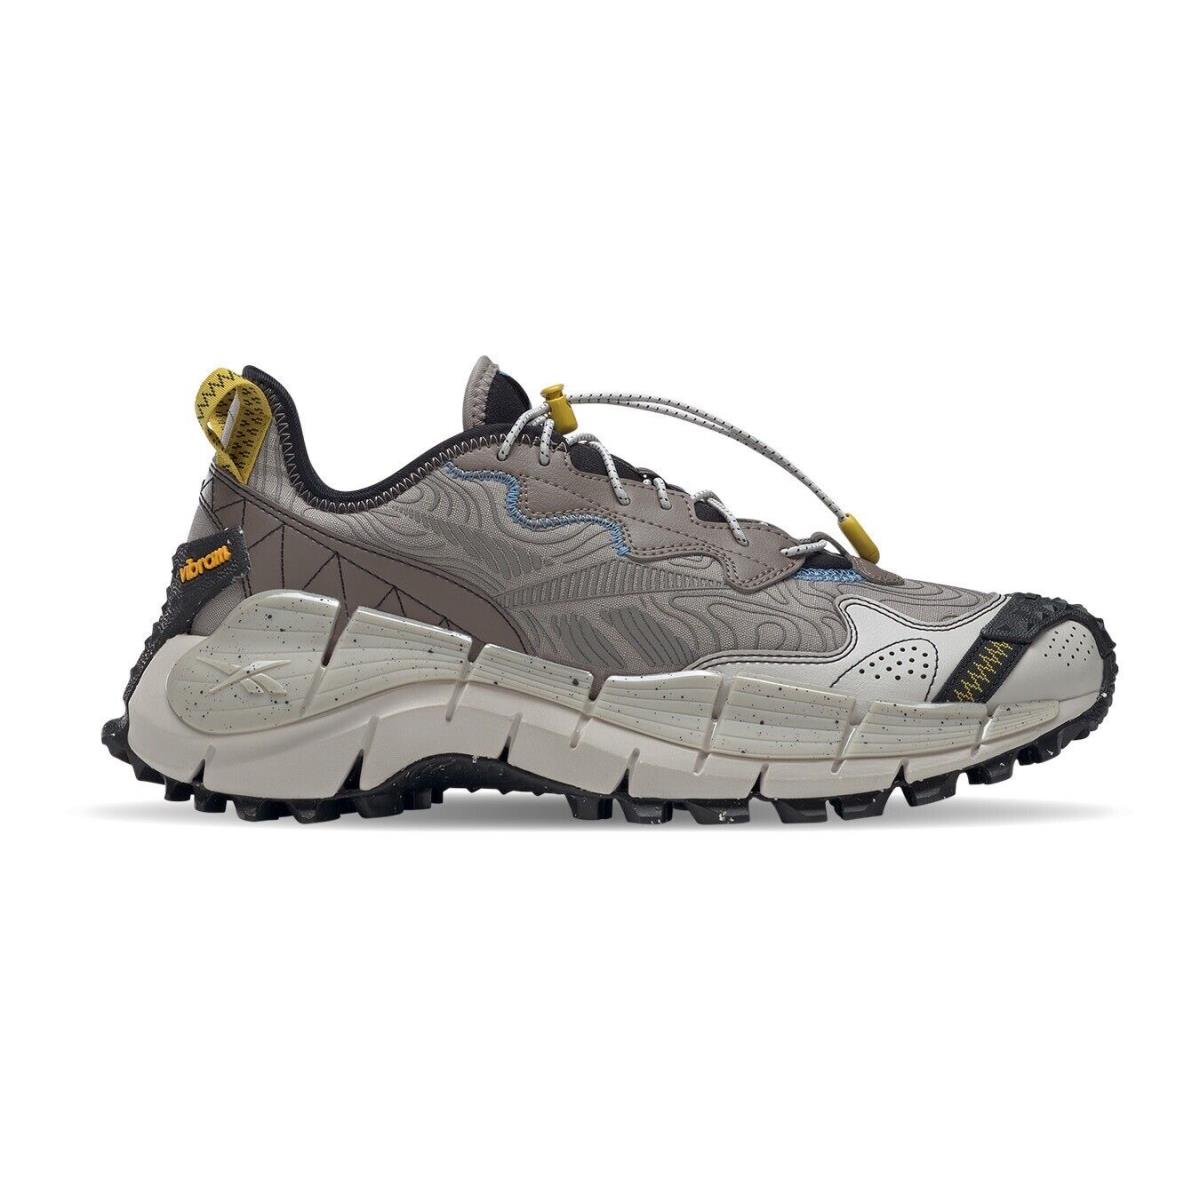 Men Reebok Zig Kinetica II Edge Trail Running Shoes Sz 7 Brown Tan Black GX0117